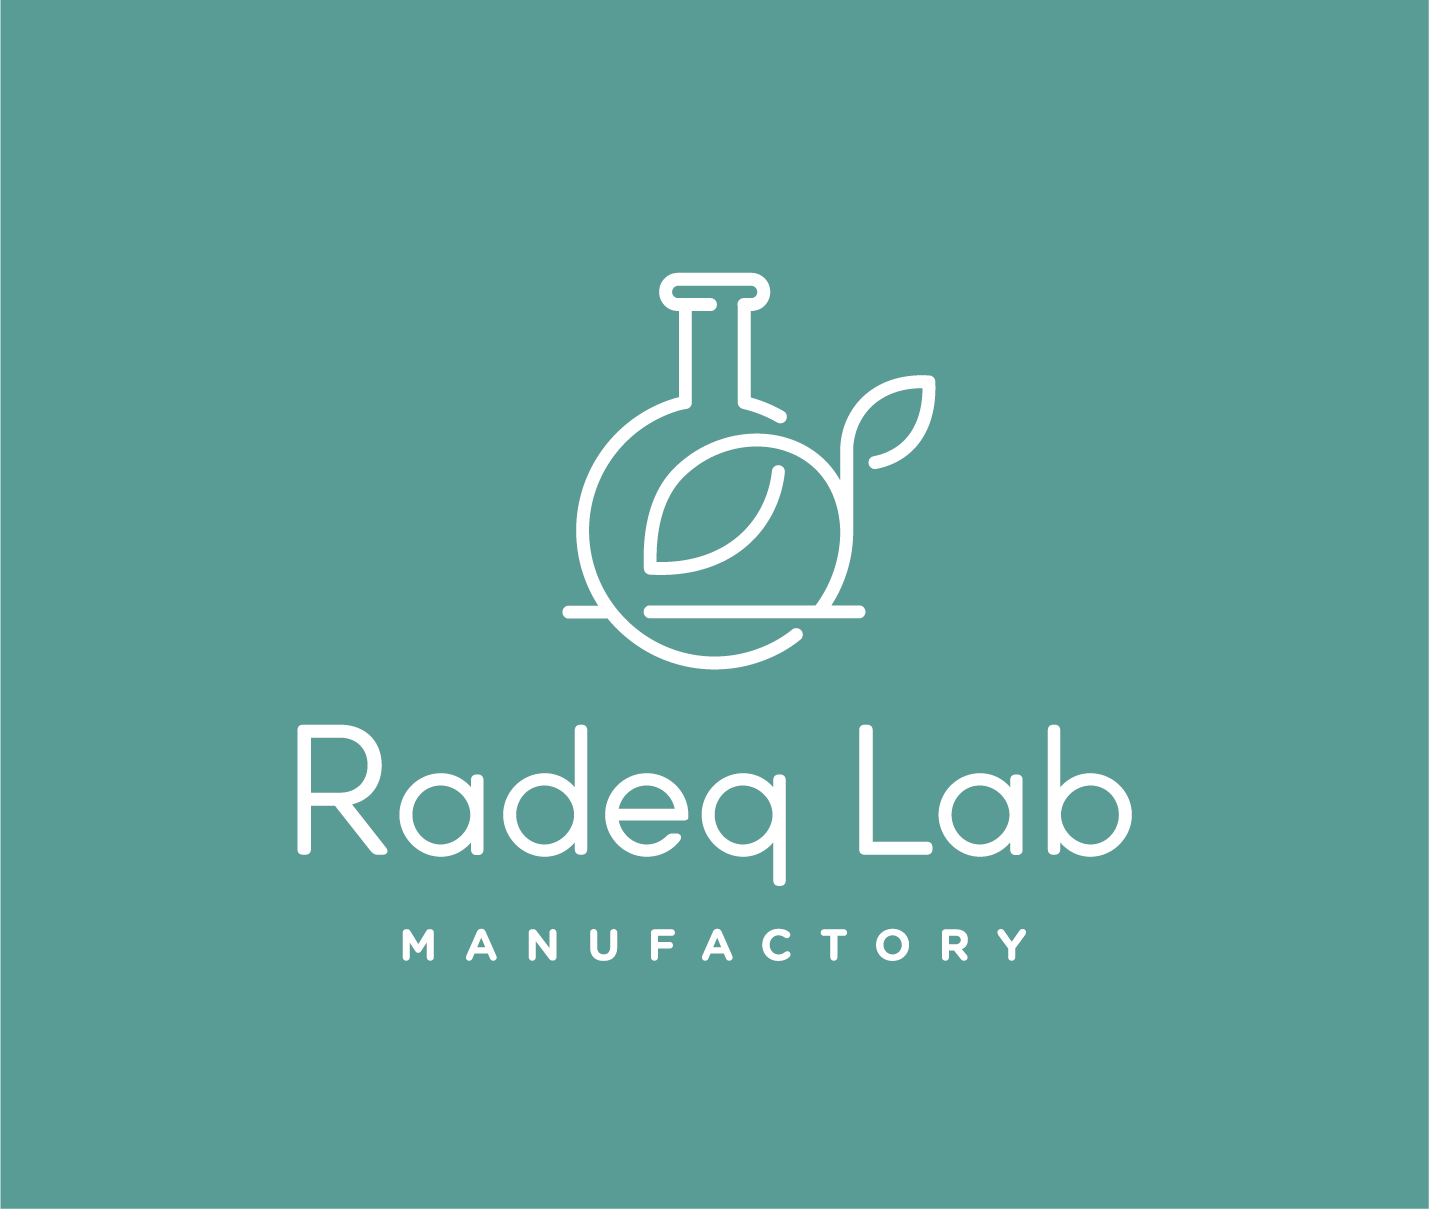 Radeq Lab Manufactory logo